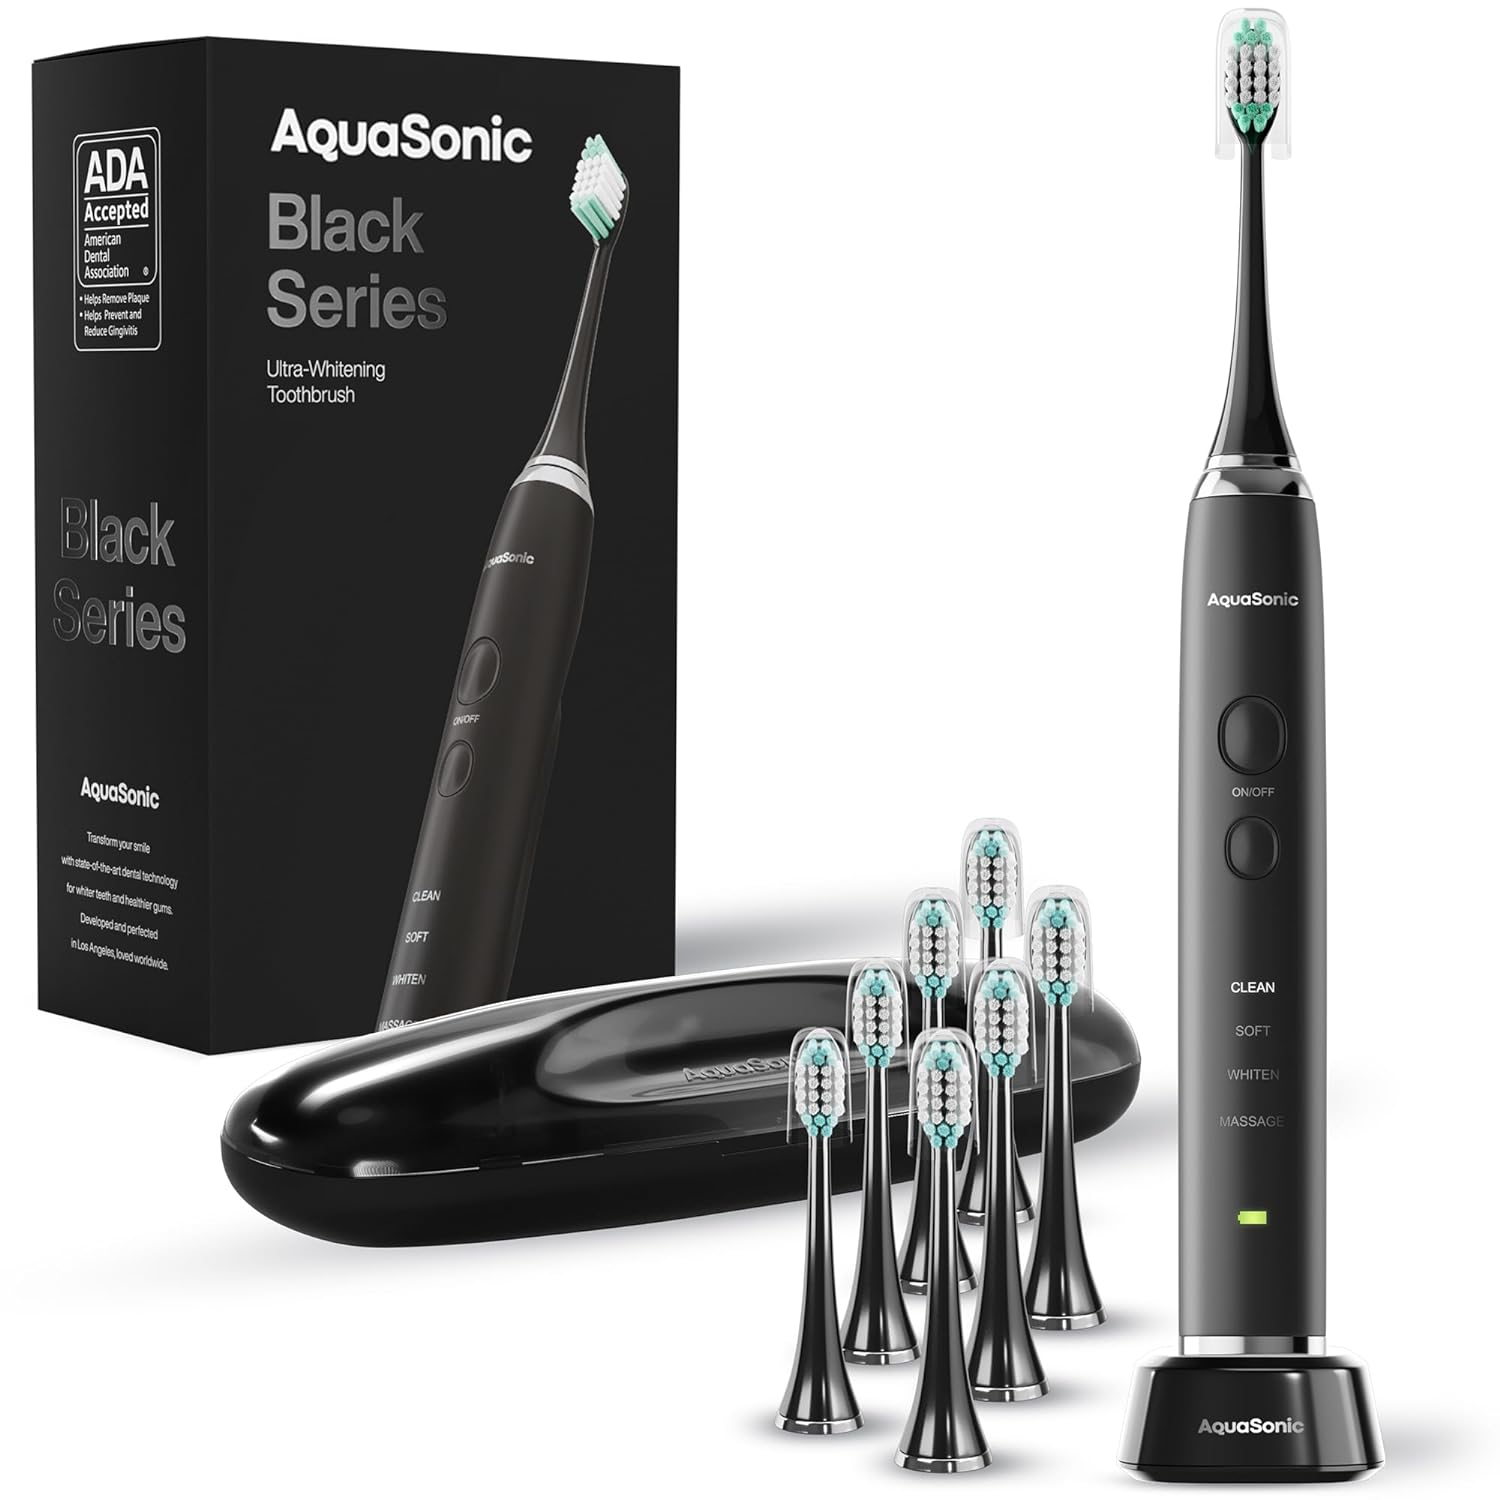 Aquasonic Black Series Ultra Whitening Toothbrush – ADA Accepted Power Toothbrush - 8 Brush Heads & Travel Case – 40,000 VPM Electric Motor & Wireless Charging $29.95